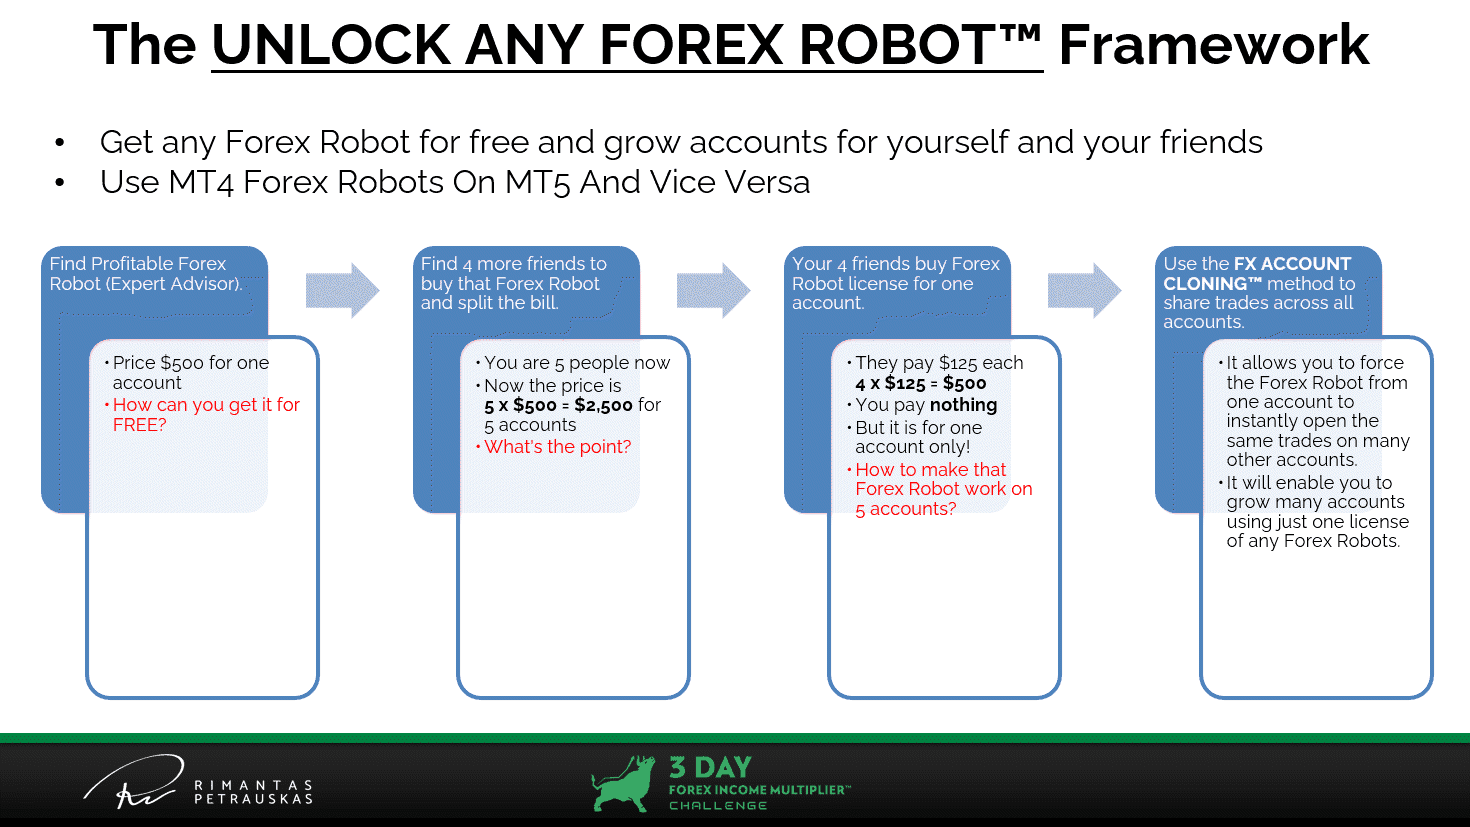 The Unlock Any Forex Robot™ framework!